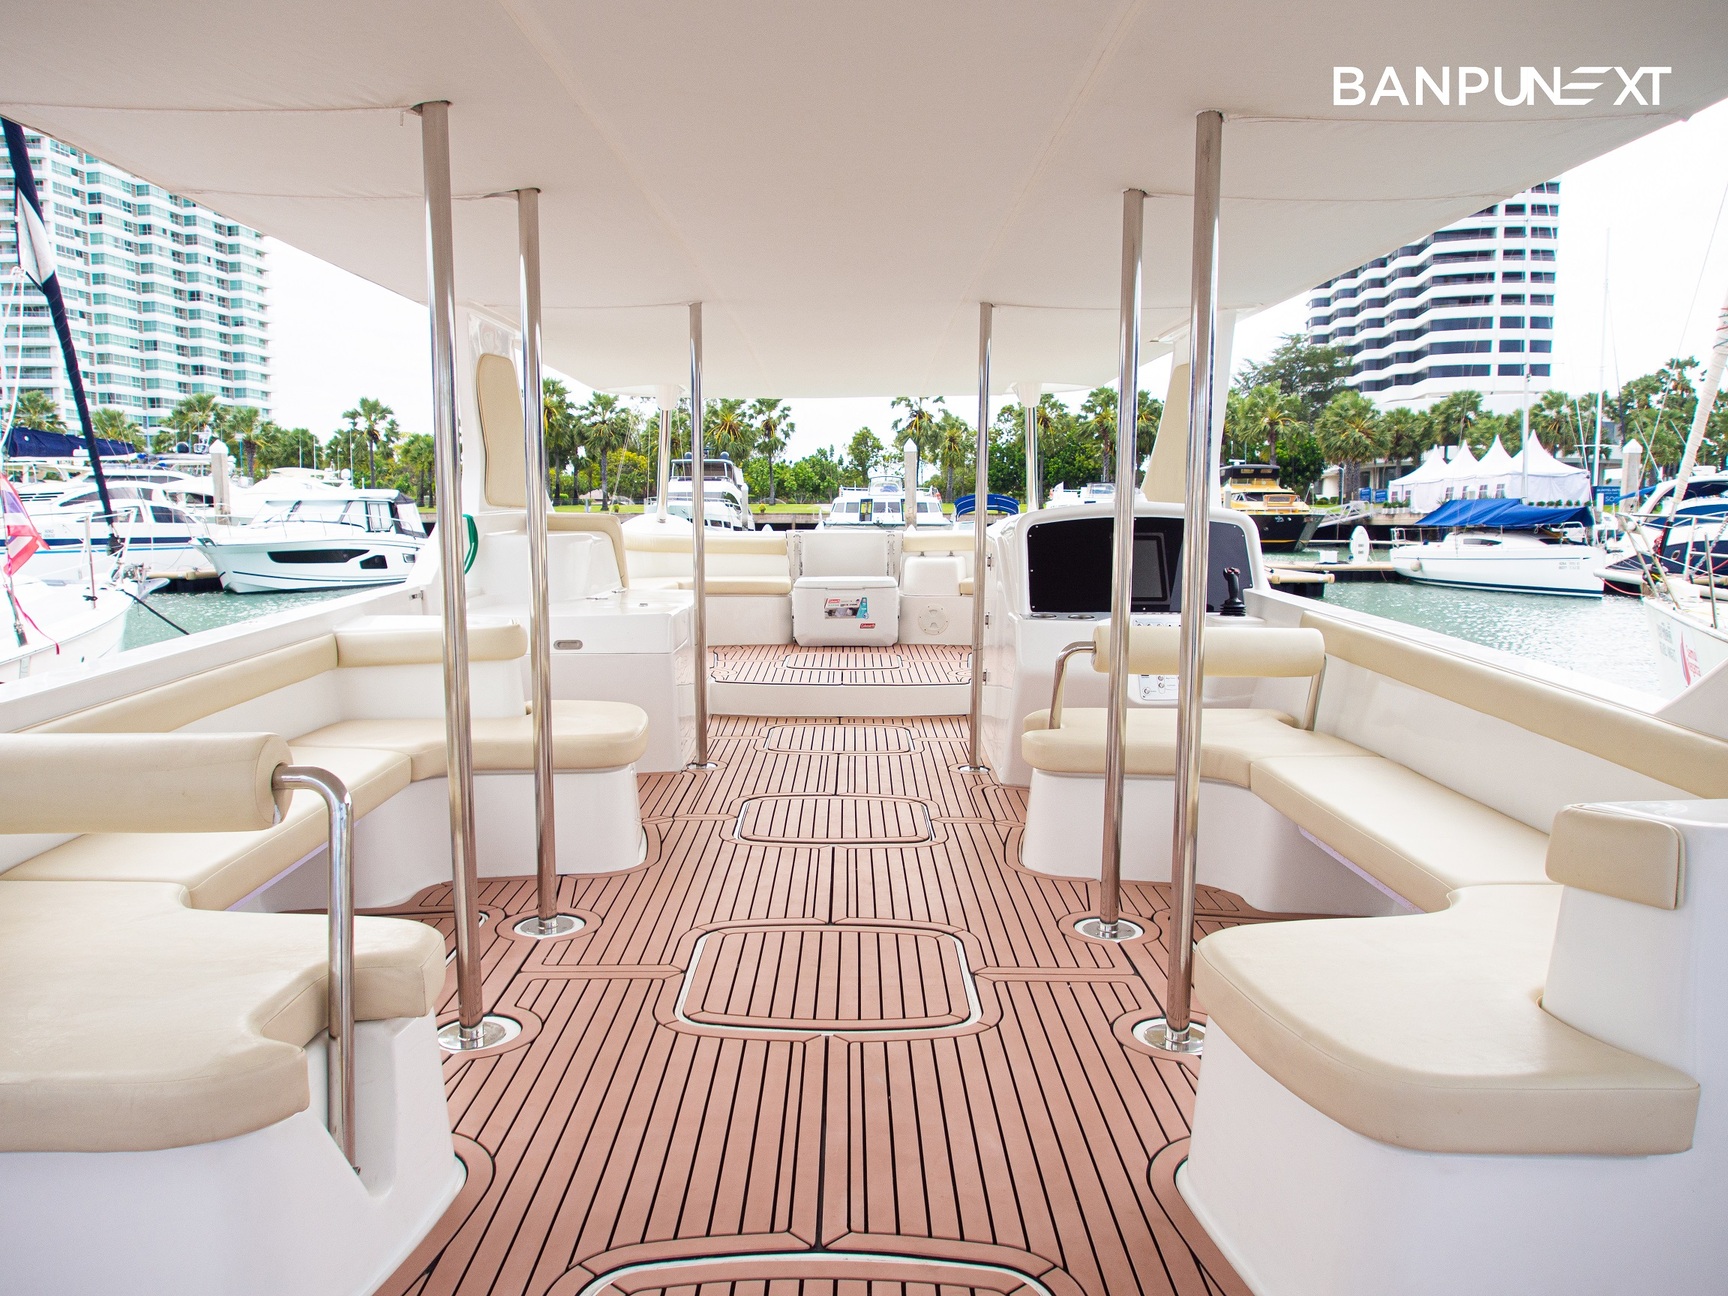 Banpu NEXT เดินหน้าพัฒนา e-Boat เรือท่องเที่ยวไฟฟ้าโมเดลใหม่ ตอบเทรนด์การท่องเที่ยวยั่งยืน